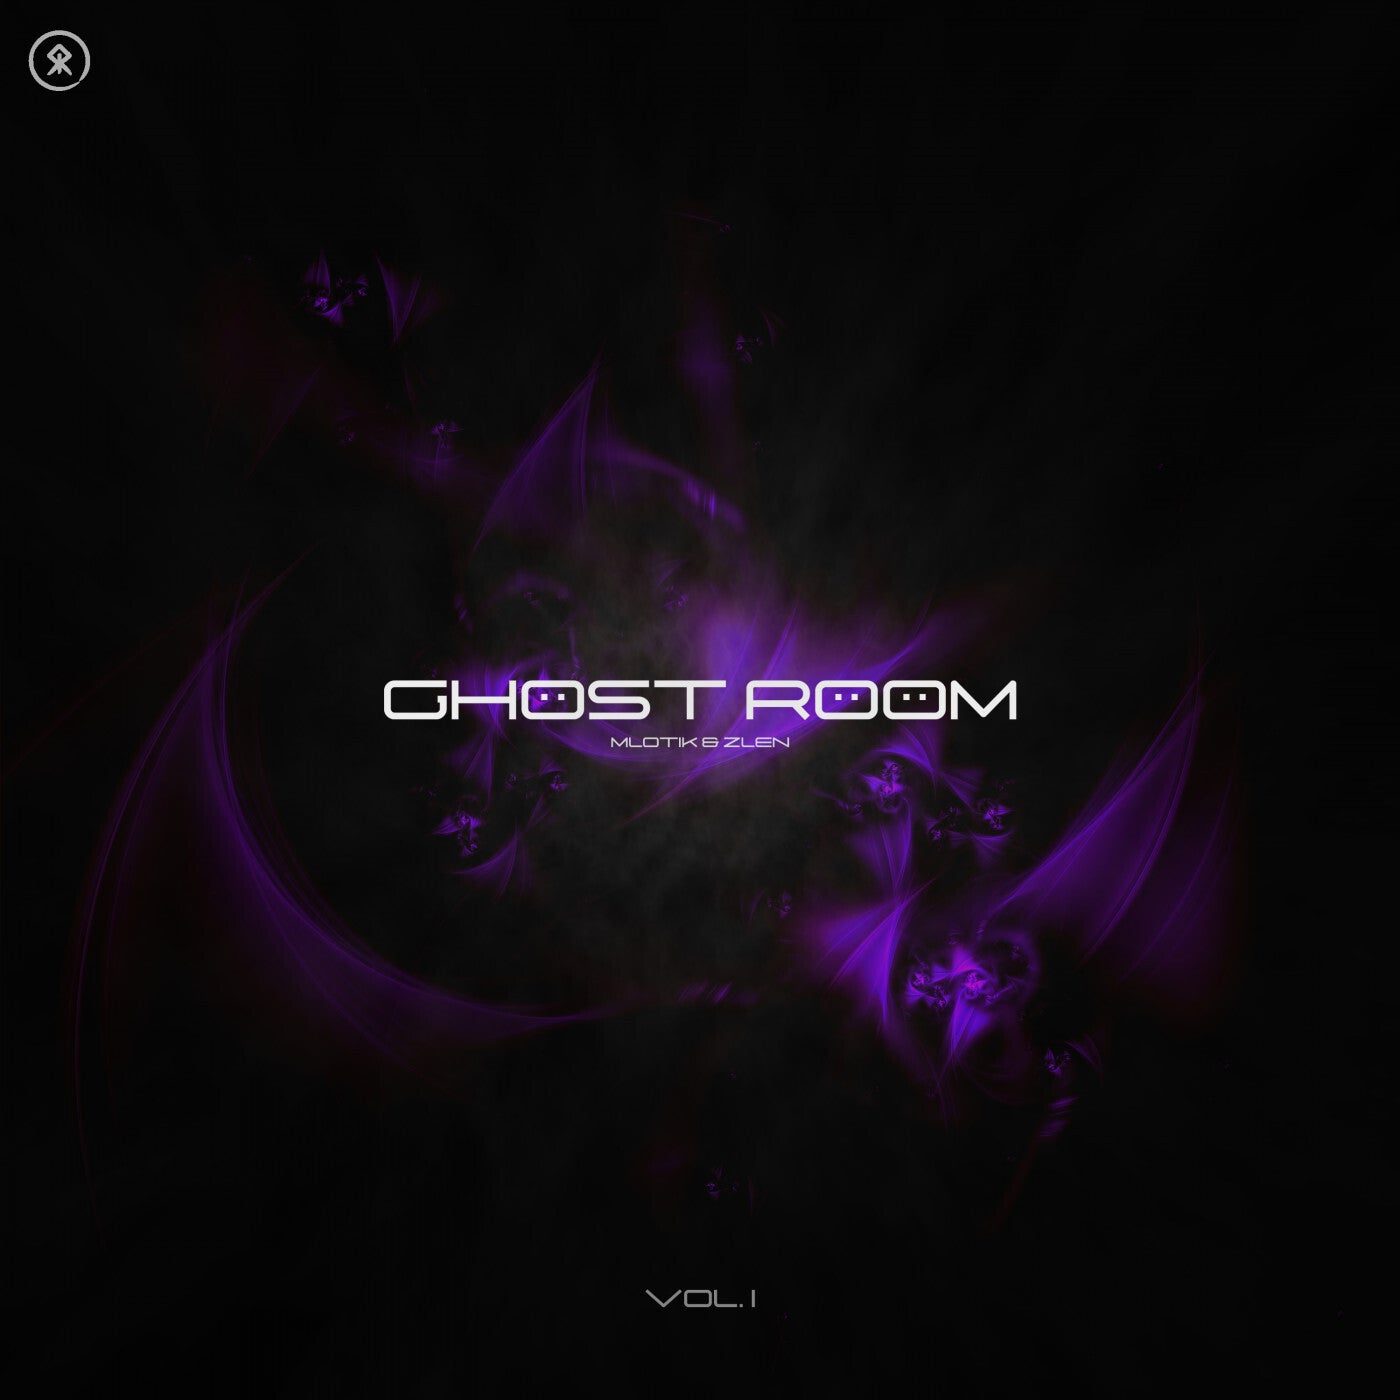 Ghost Room Vol. I